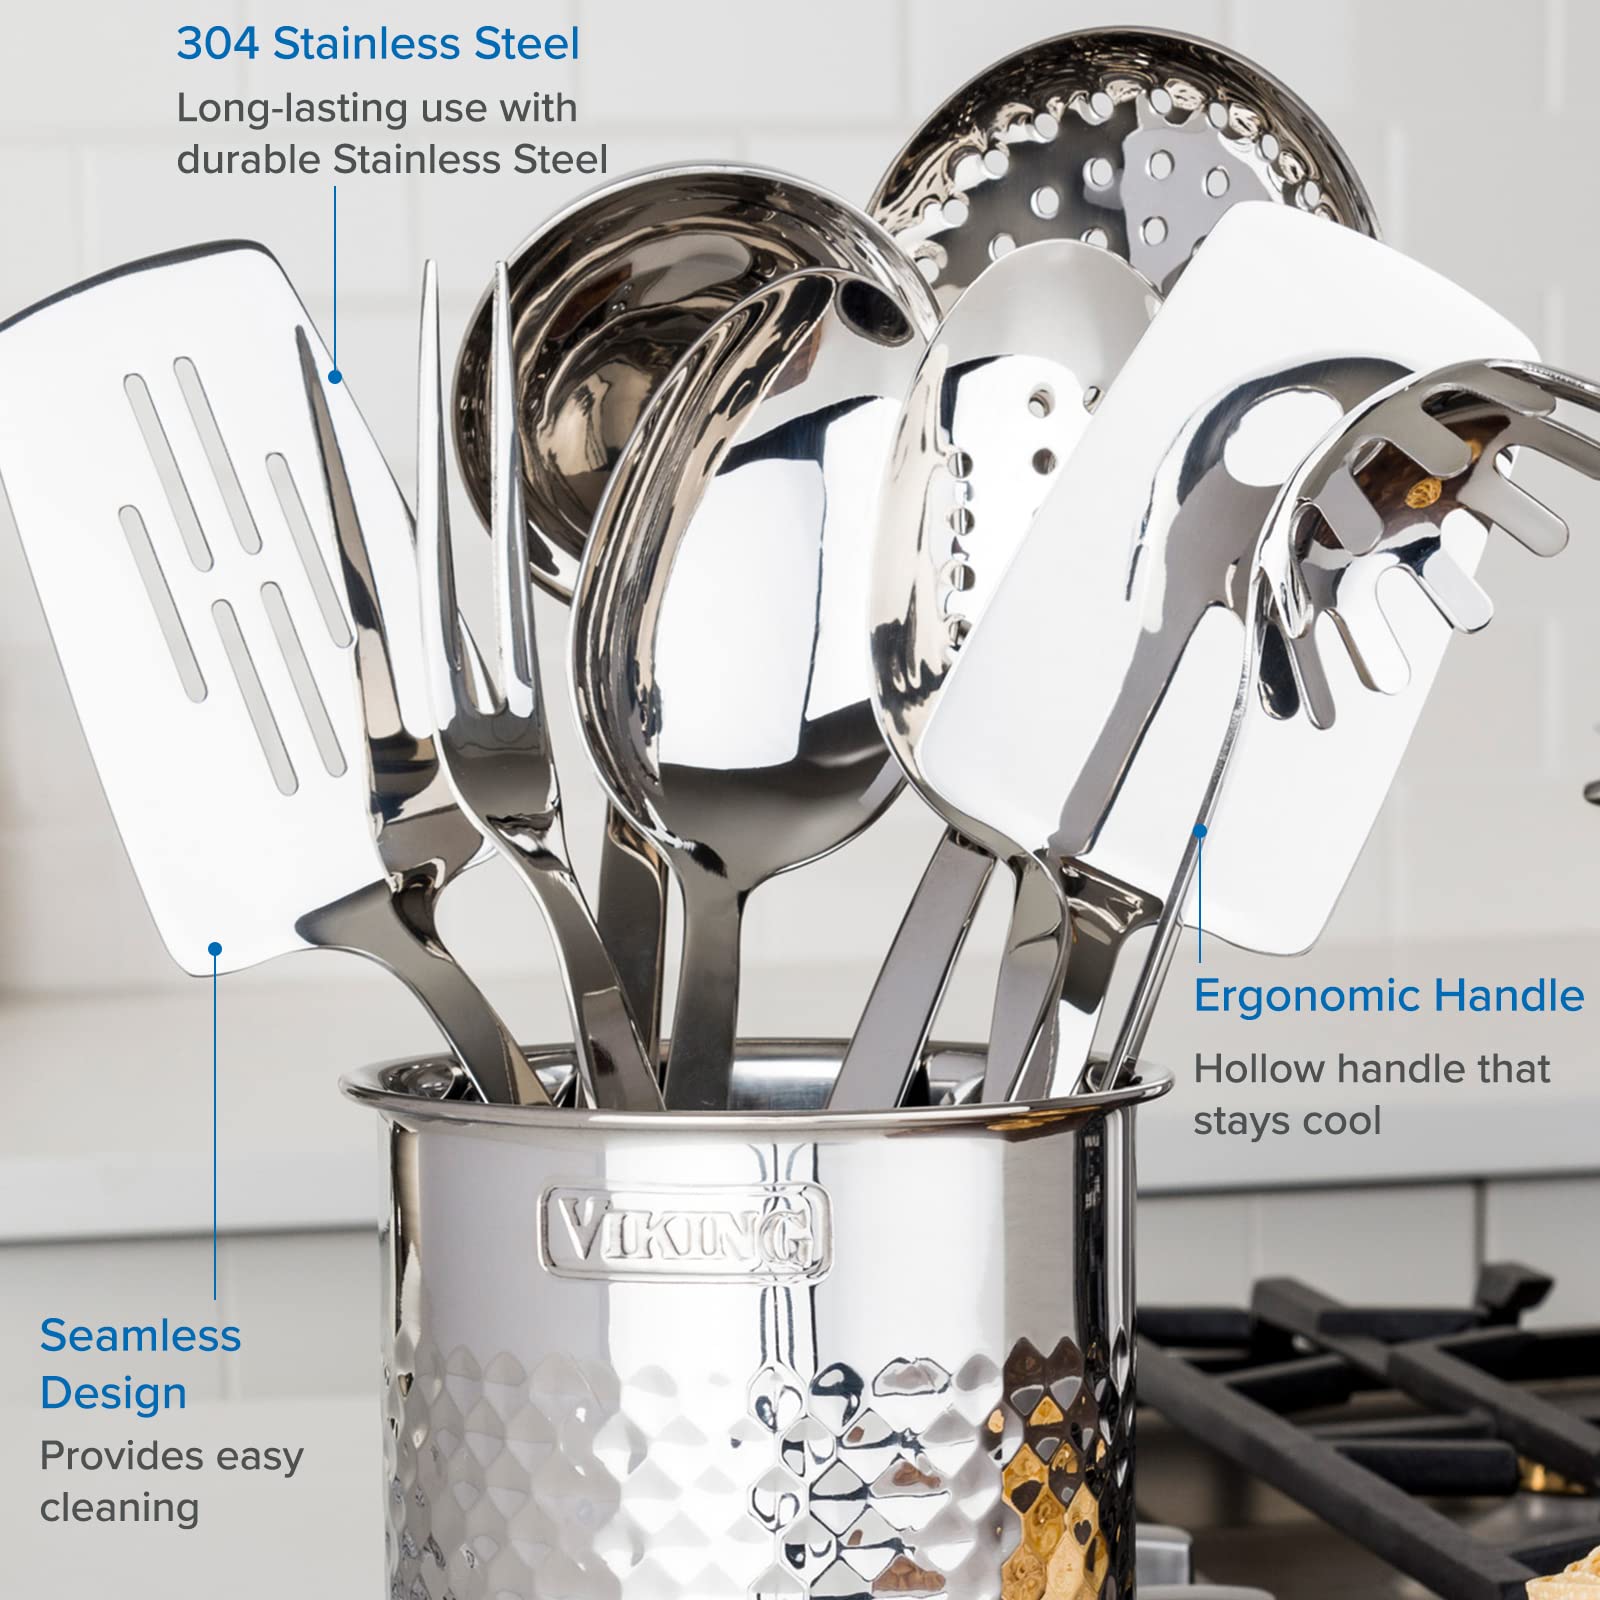 Viking Culinary 304 Stainless Steel Kitchen Utensil Set, Ergonomic Stay-Cool Handles, Dishwasher Safe, Silver, 8 Piece